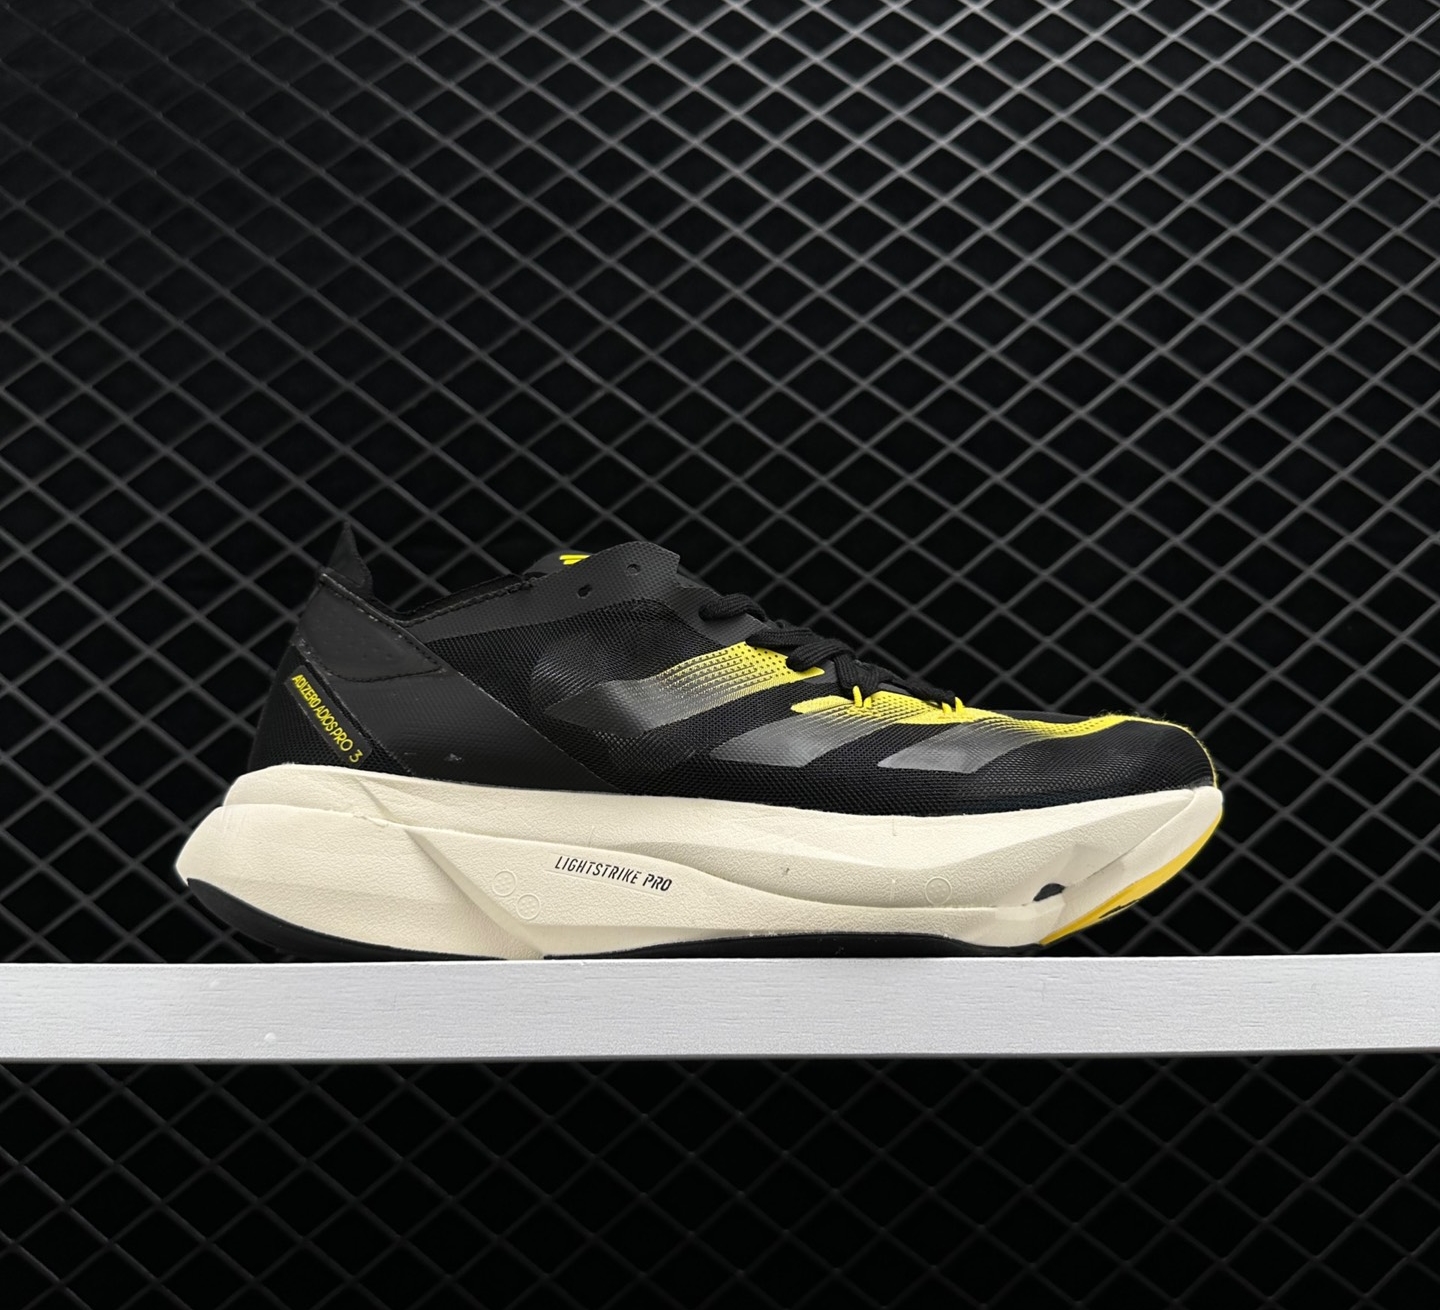 Adidas Adizero Adios Pro 3 - Black Yellow: Ultra-light Performance Running Shoe